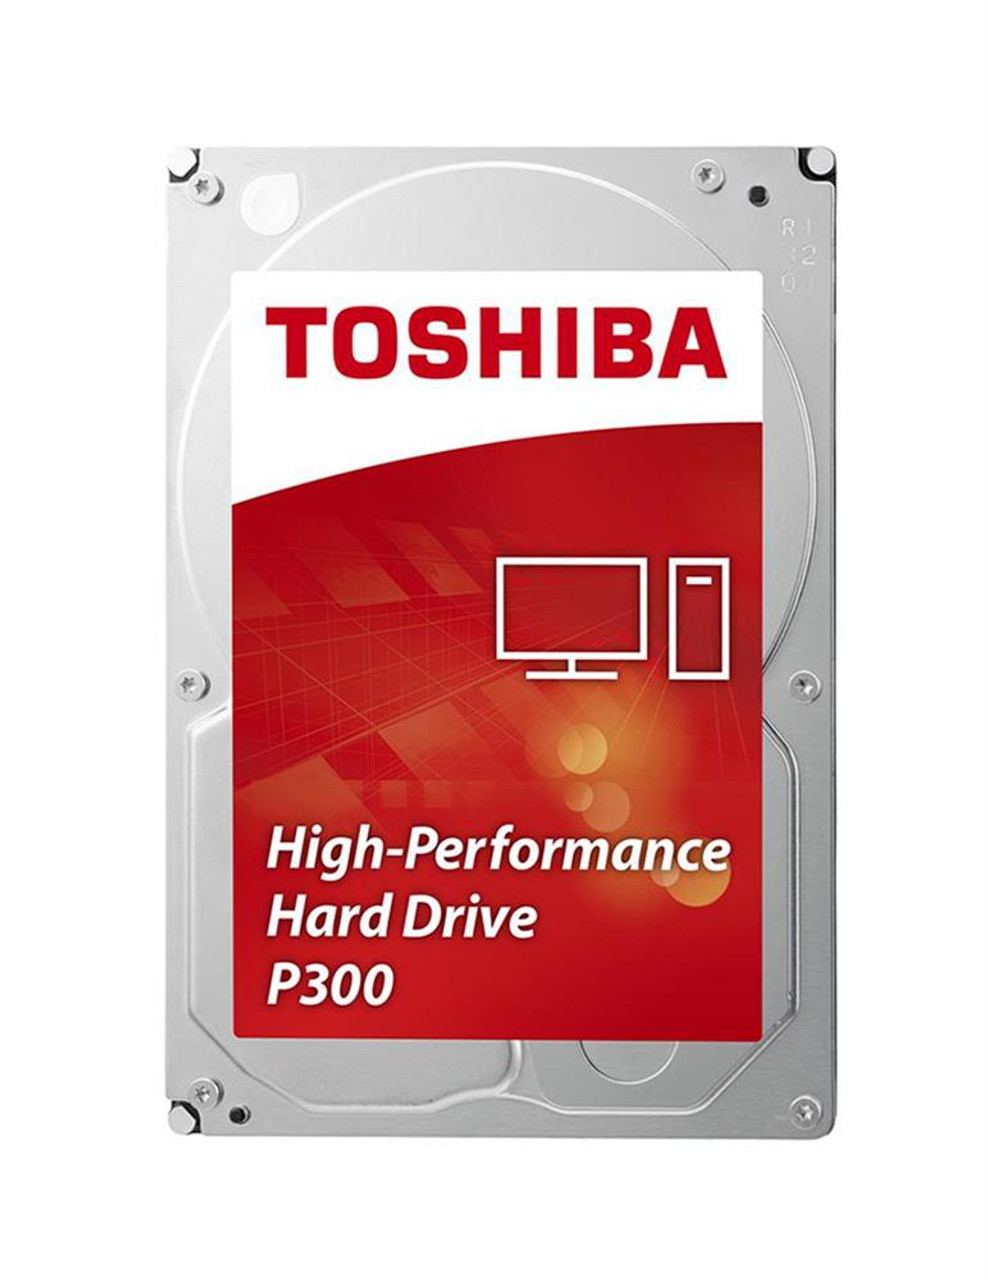 HDKPC35AKA01 Toshiba P300 500GB 7200RPM SATA 6Gbps 64MB Cache (512e) 3.5-inch Internal Hard Drive